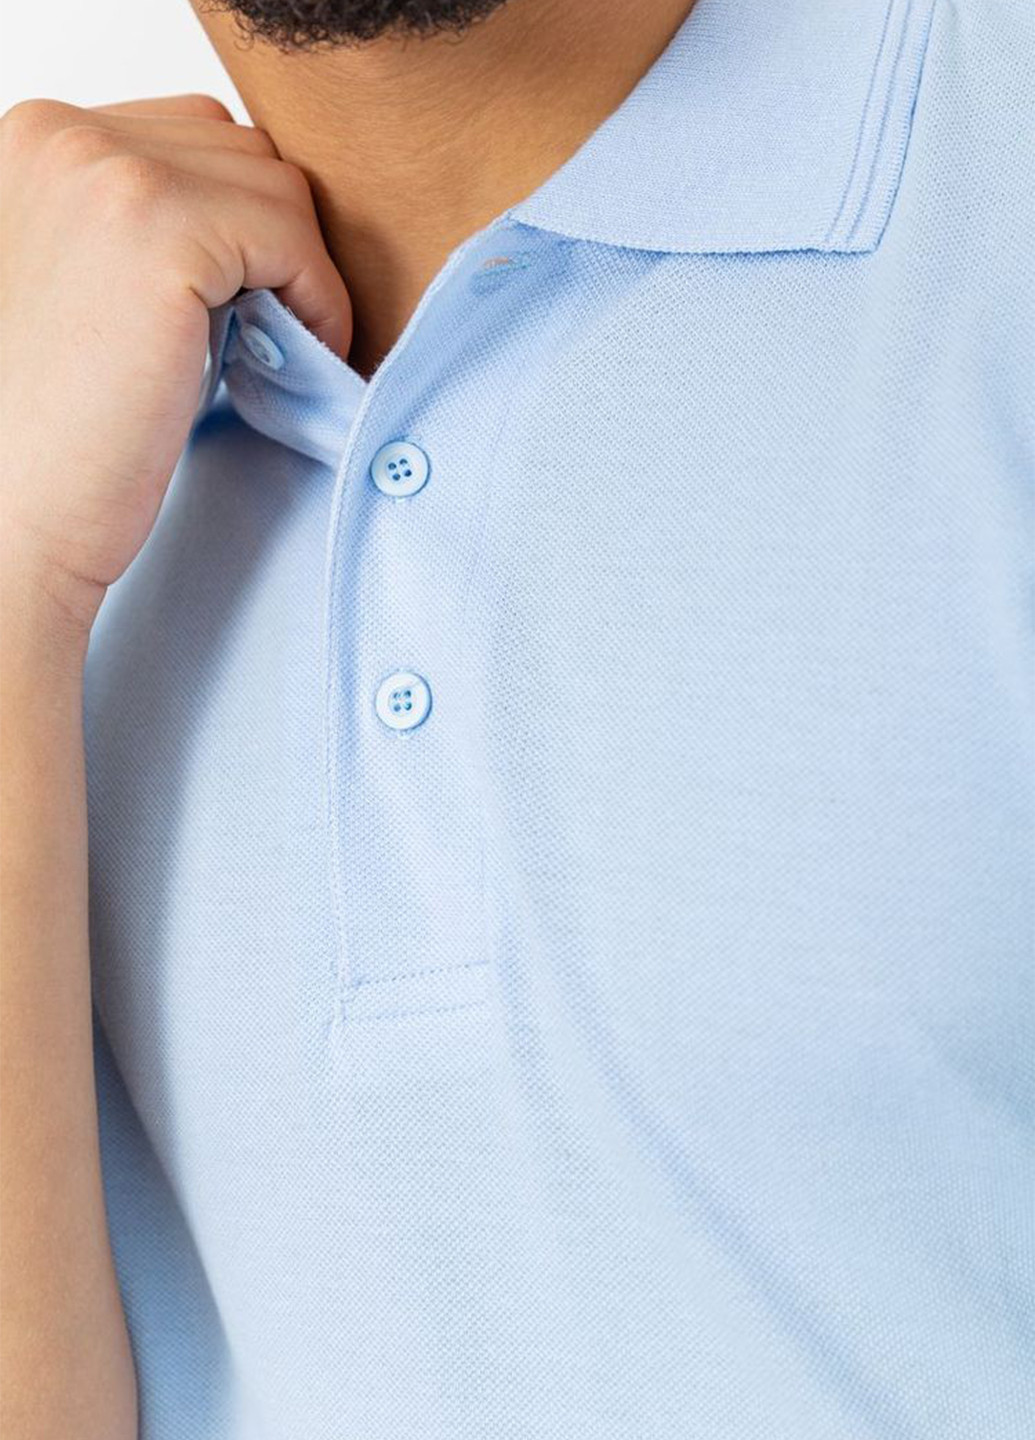 Голубой футболка-поло для мужчин Ager однотонная